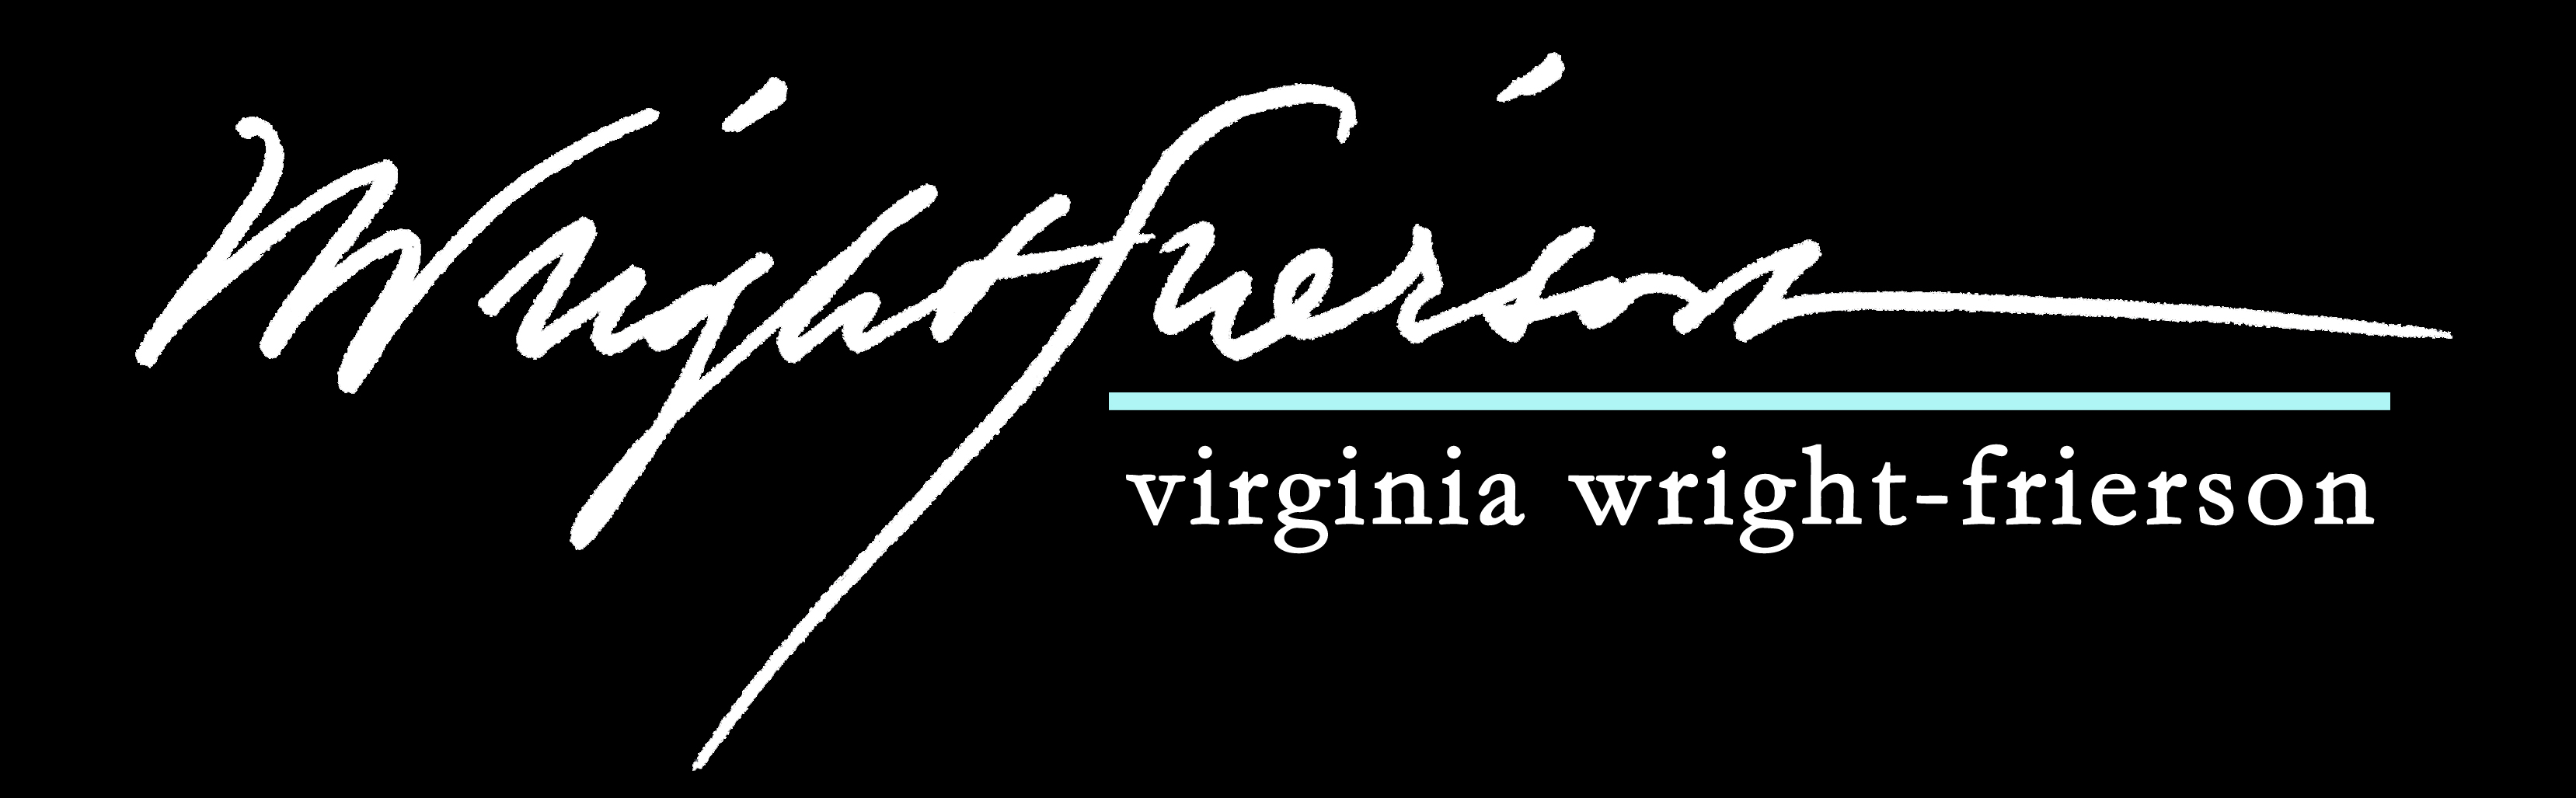 www.virginiawright-frierson.com